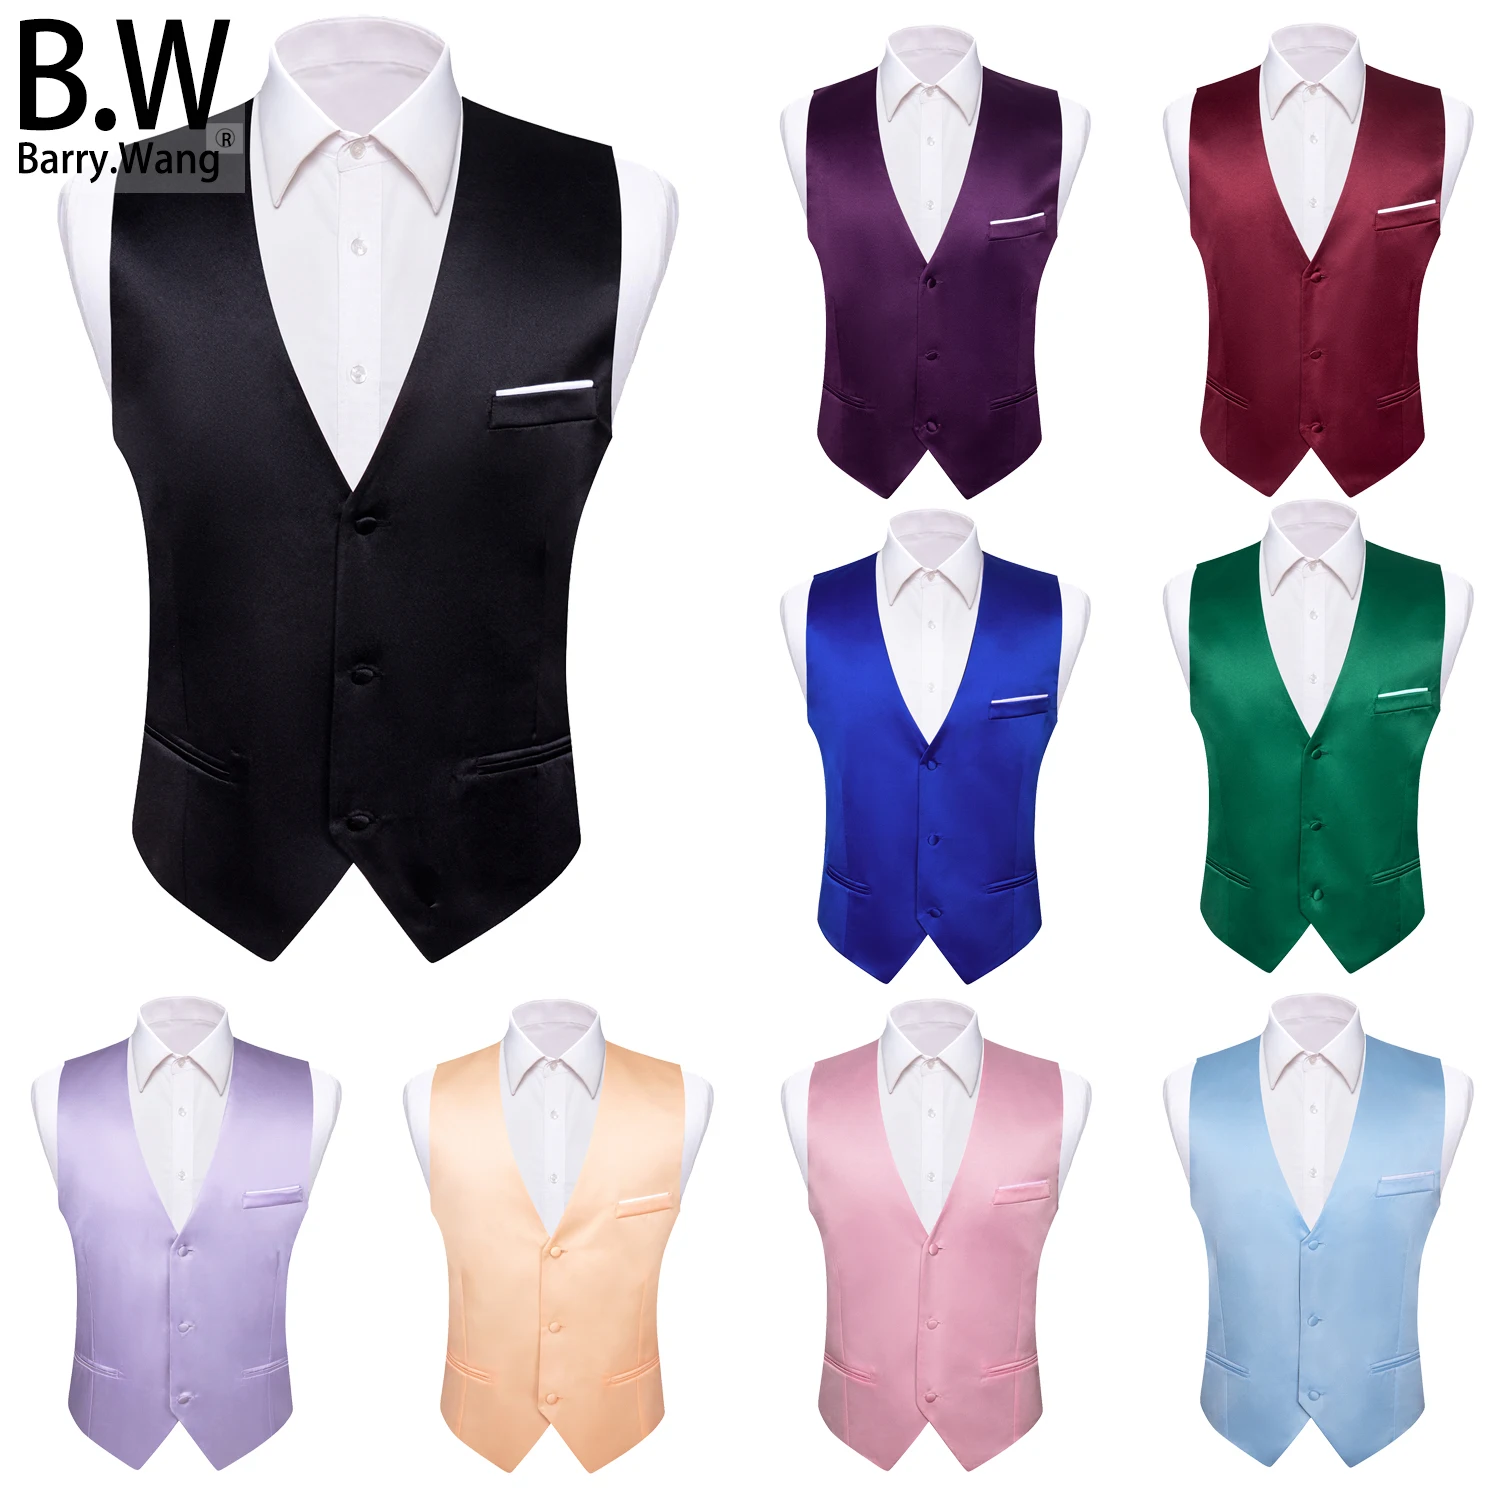 

Barry.Wang Desinger Silk Men Vest Jacquard Solid Plain 3 Buttons Casual Waistcoat Sleeveless Jacket Male Wedding Business Party